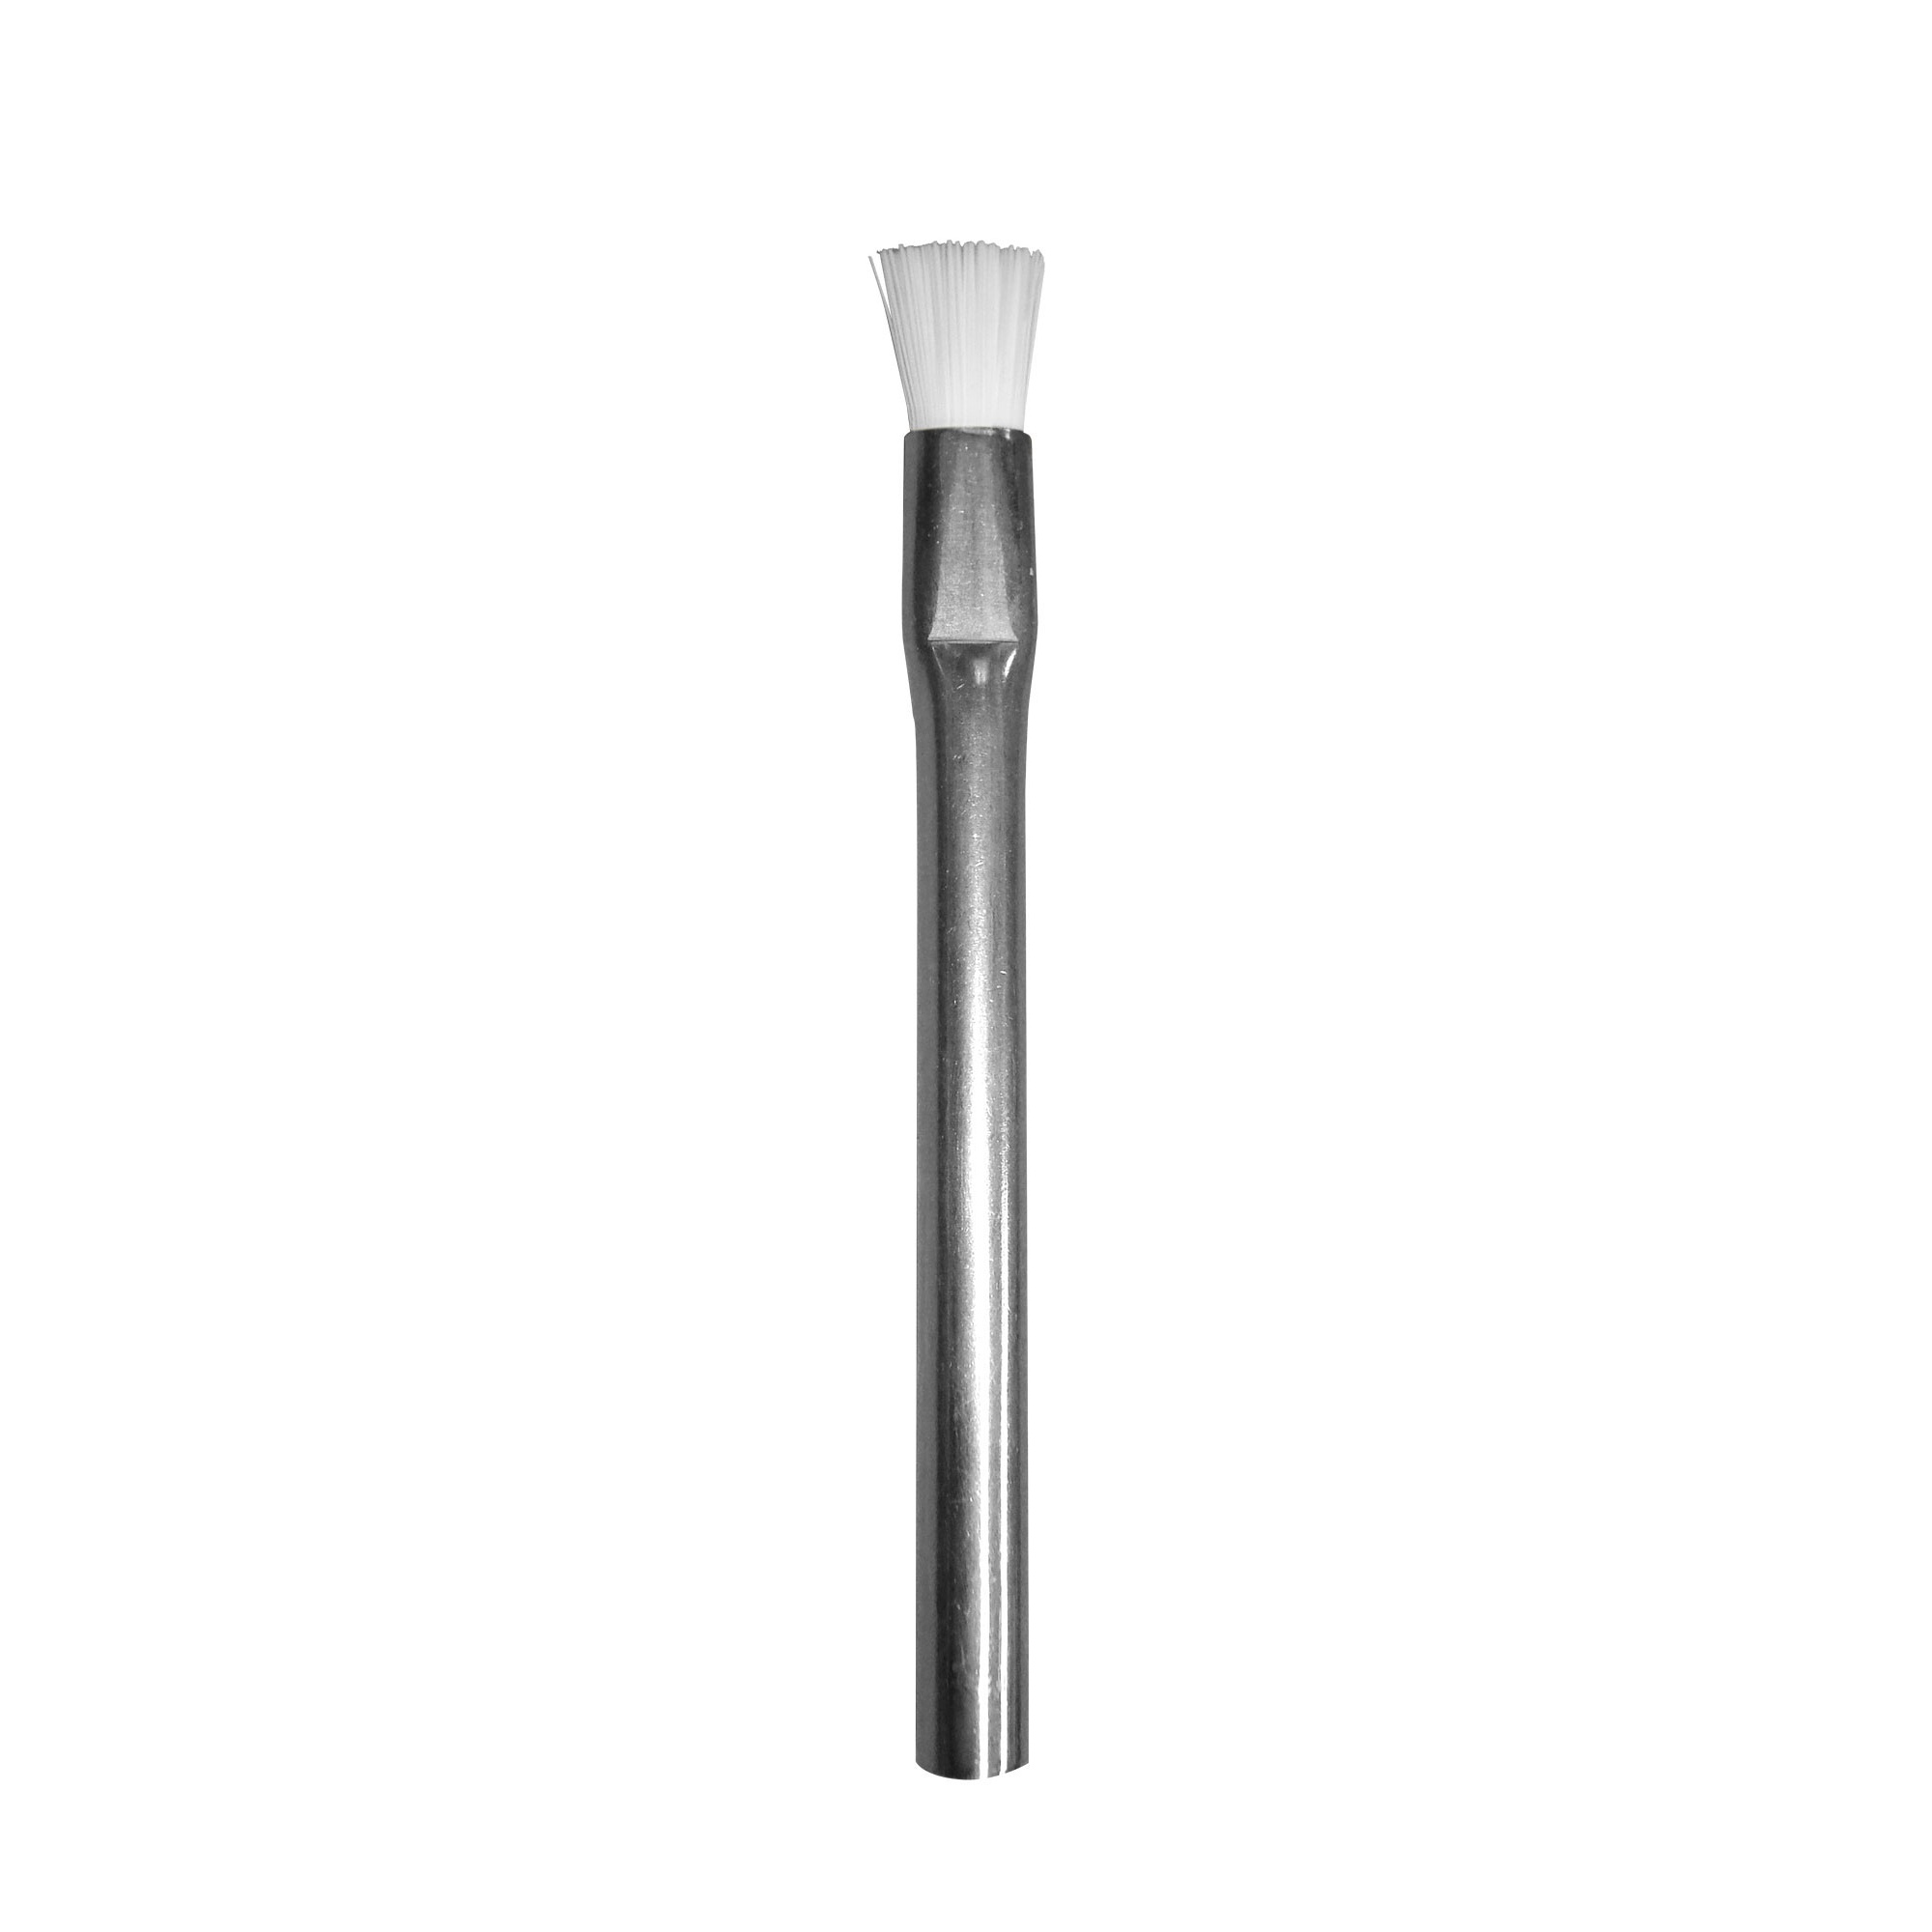 Applicator Brush — 0.011" PTFE Bristle / 3/16" Diameter Stainless Steel Tube Handle 1